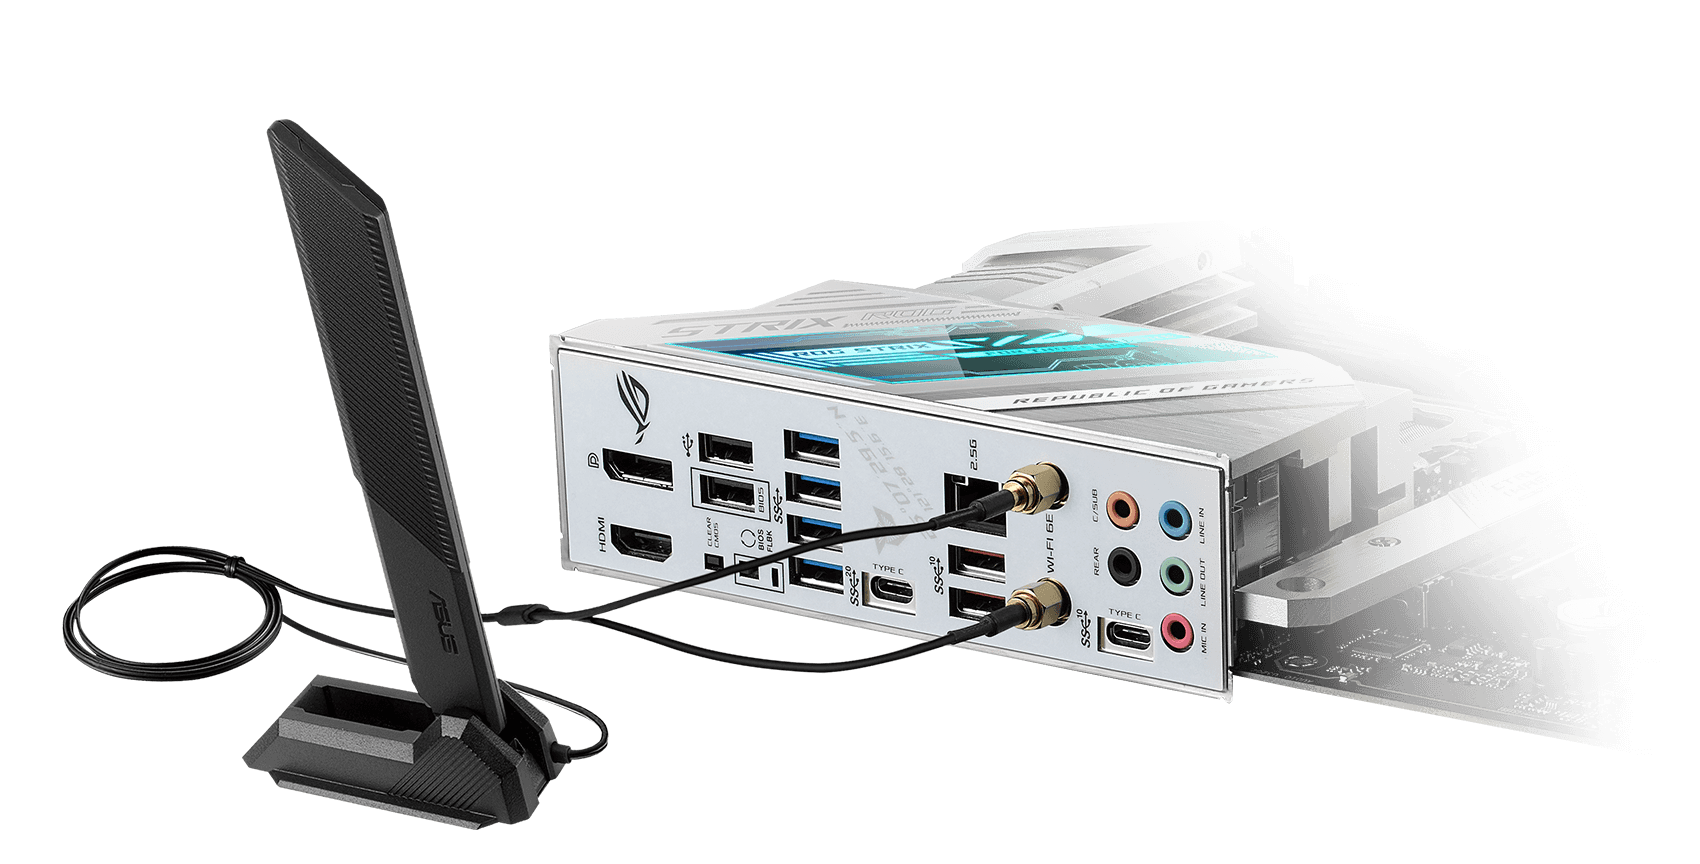 De ROG Strix Z690-A Gaming WiFi is voorzien van WiFi 6E en 2.5 Gb Ethernet